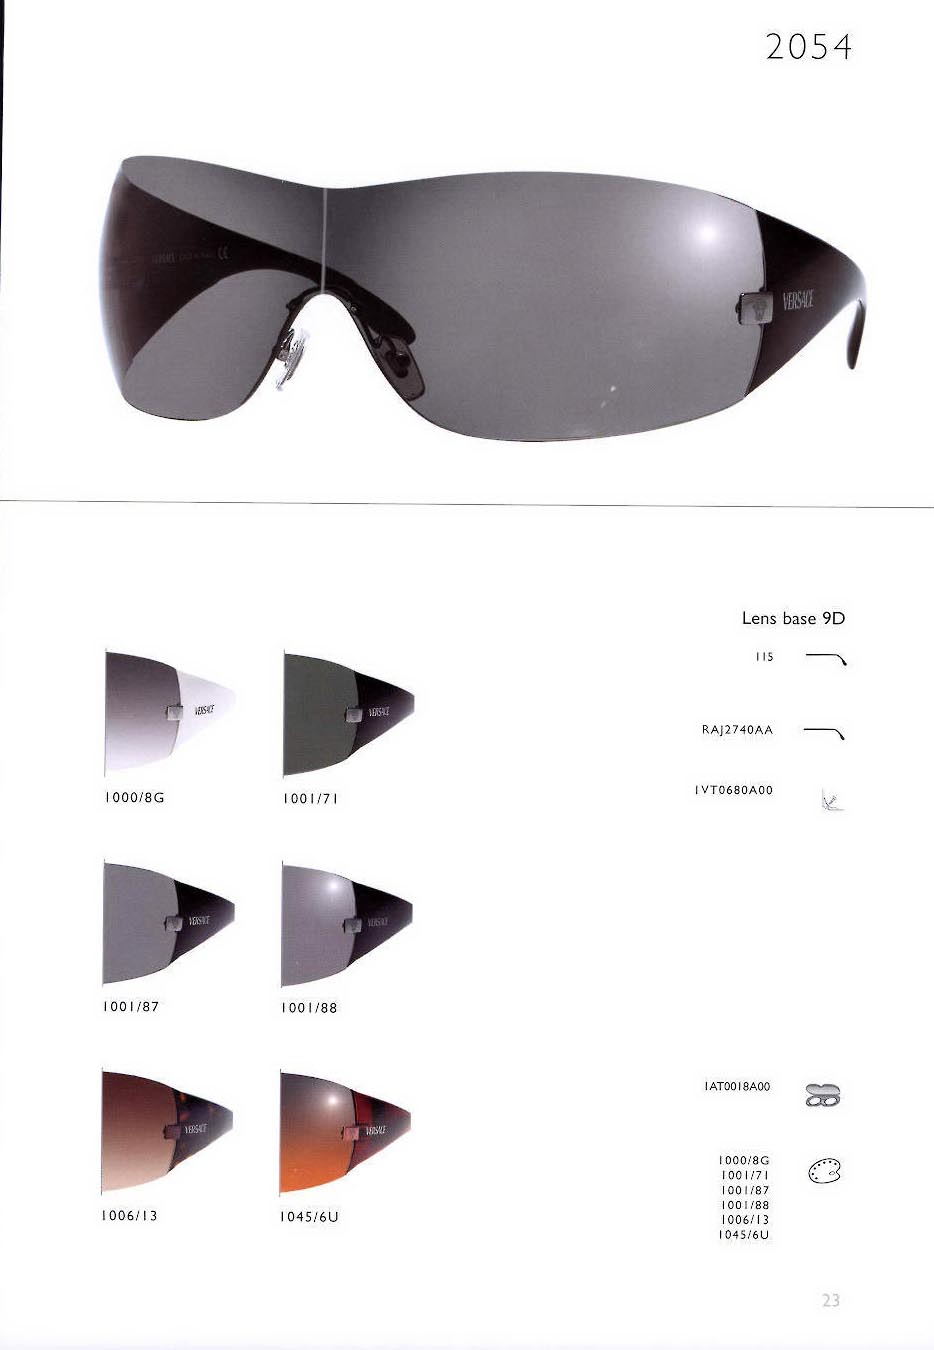 Sunglasses Versace 2054 100188